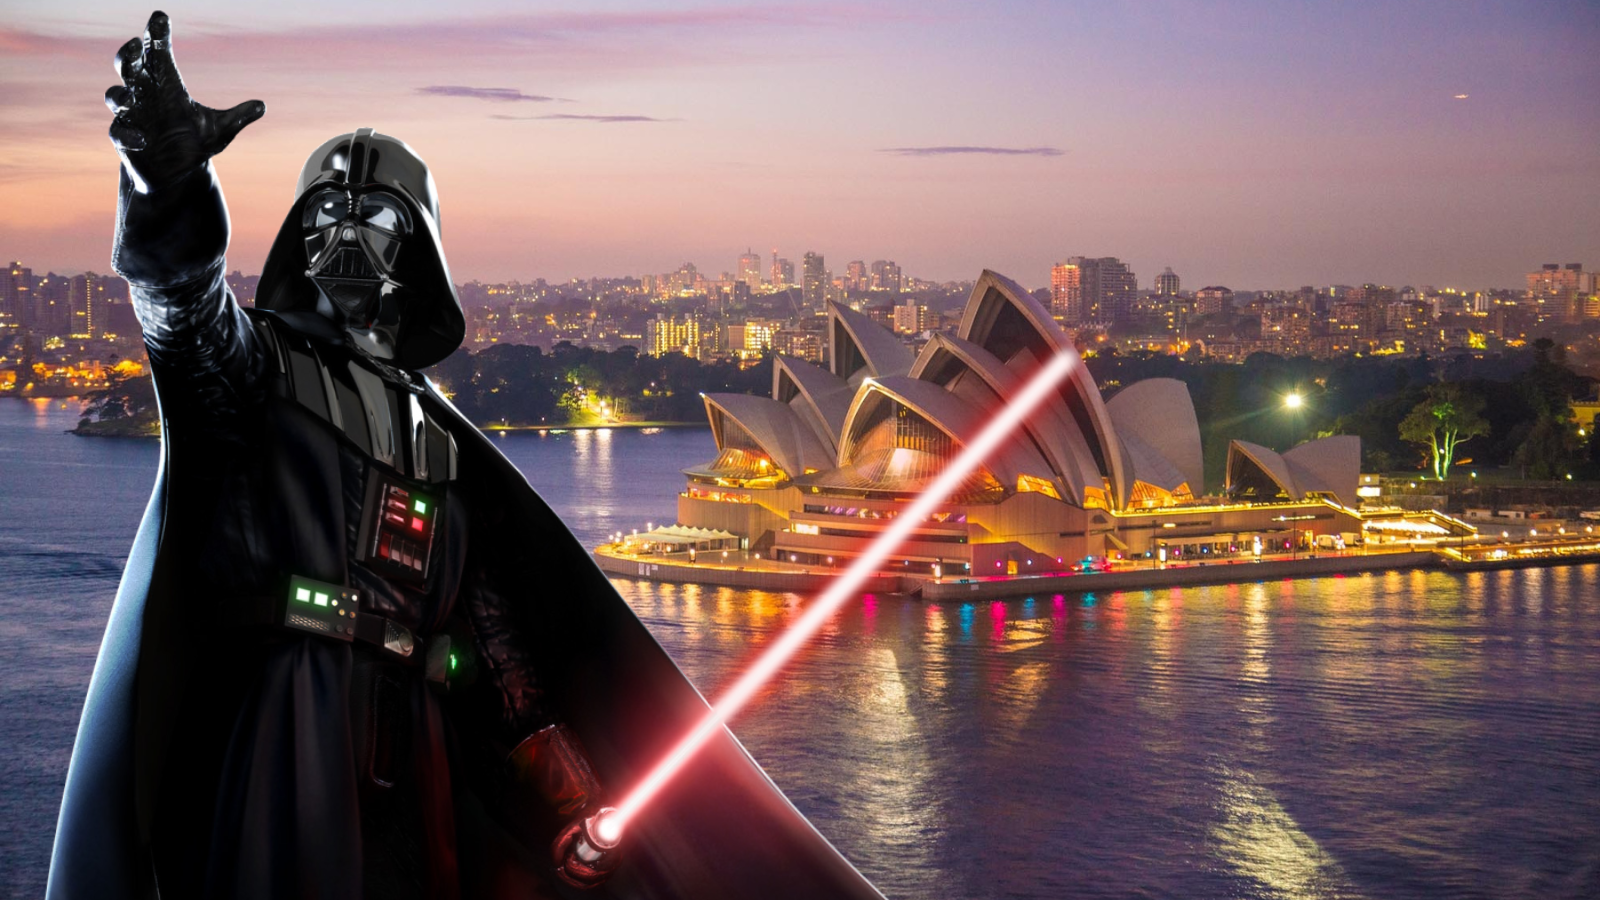 Star Wars Vivid Sydney Cosplay